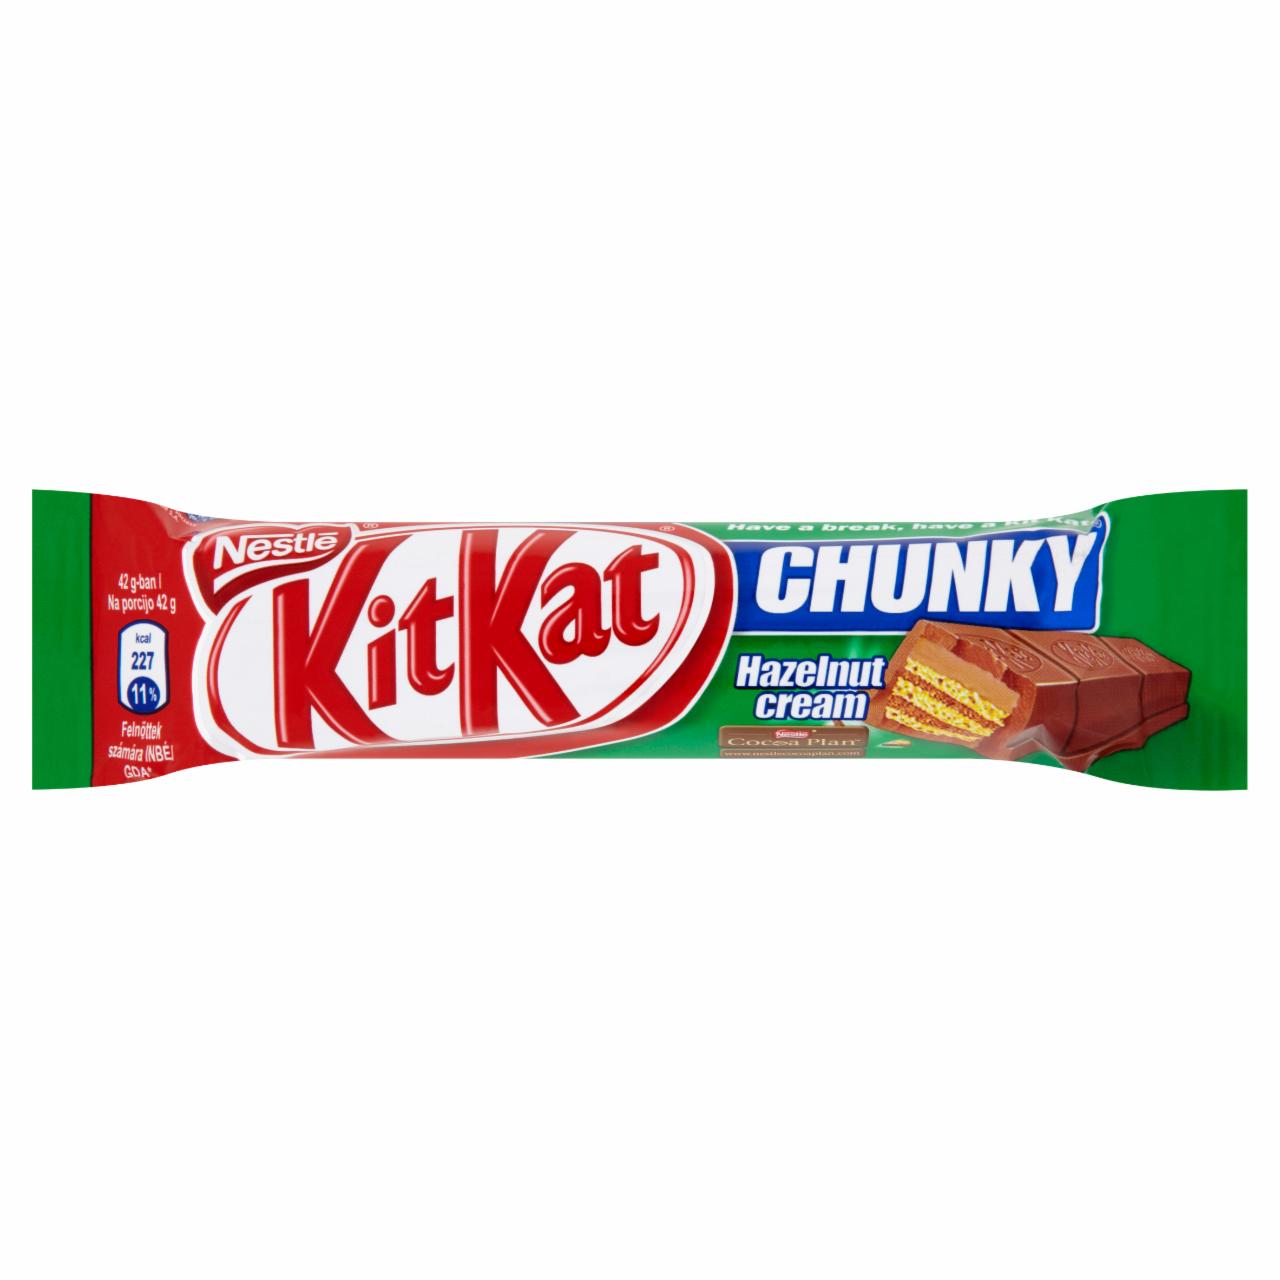 Képek - KitKat Chunky tejcsokoládé mogyorós krémmel bevont ropogós ostyával 42 g